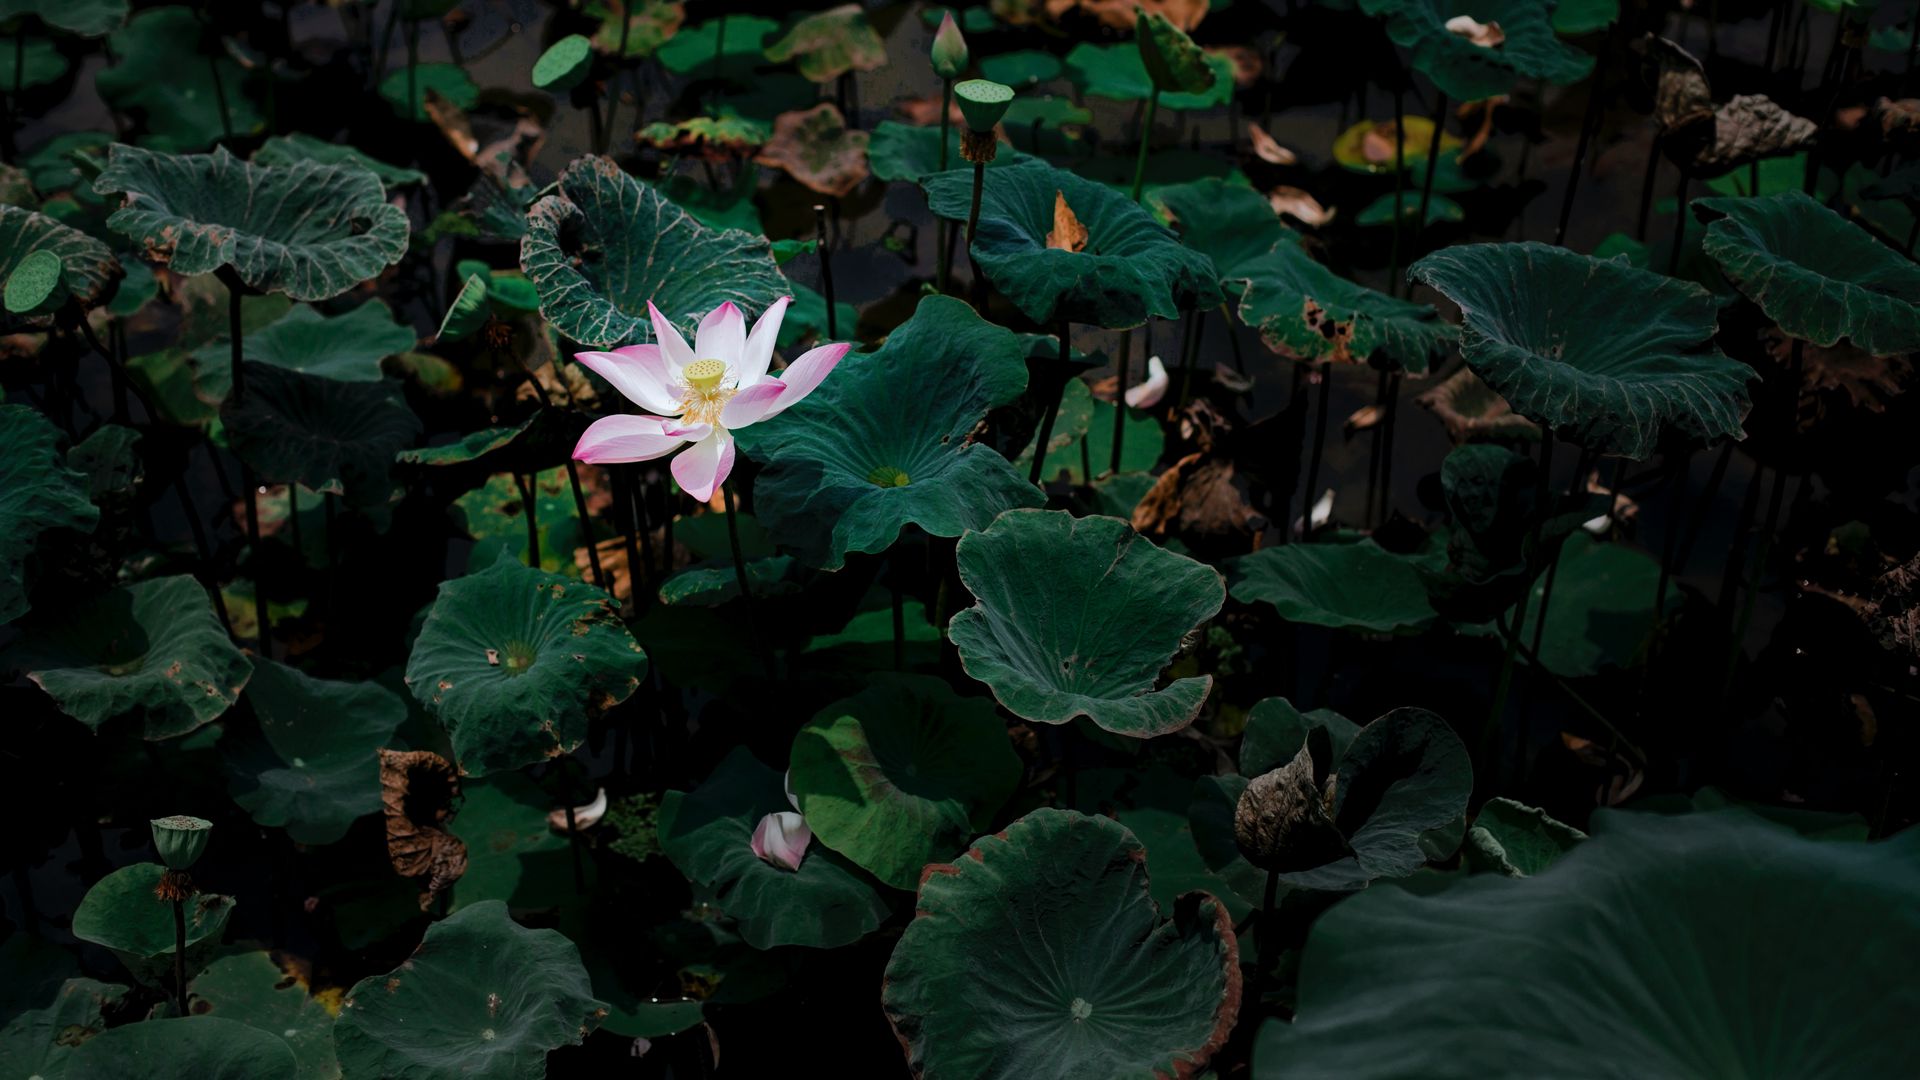 Download wallpaper 1920x1080 lotus, flower, leaves, lake full hd, hdtv,  fhd, 1080p hd background